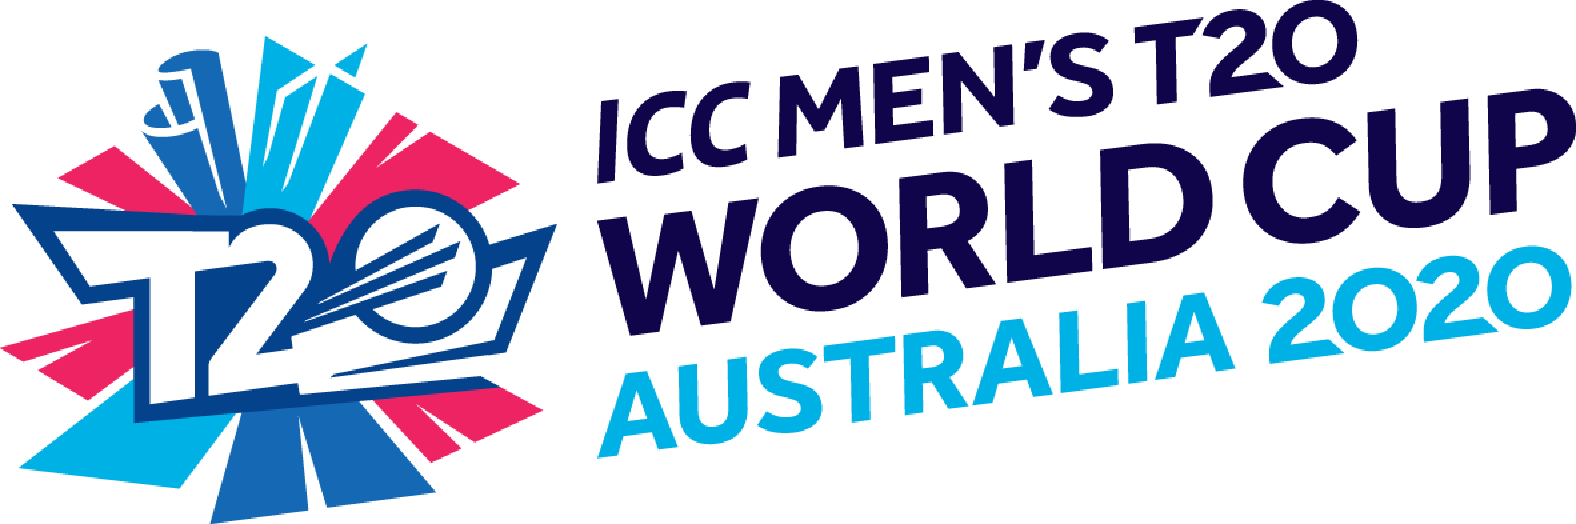 Men's T20 World Cup logo